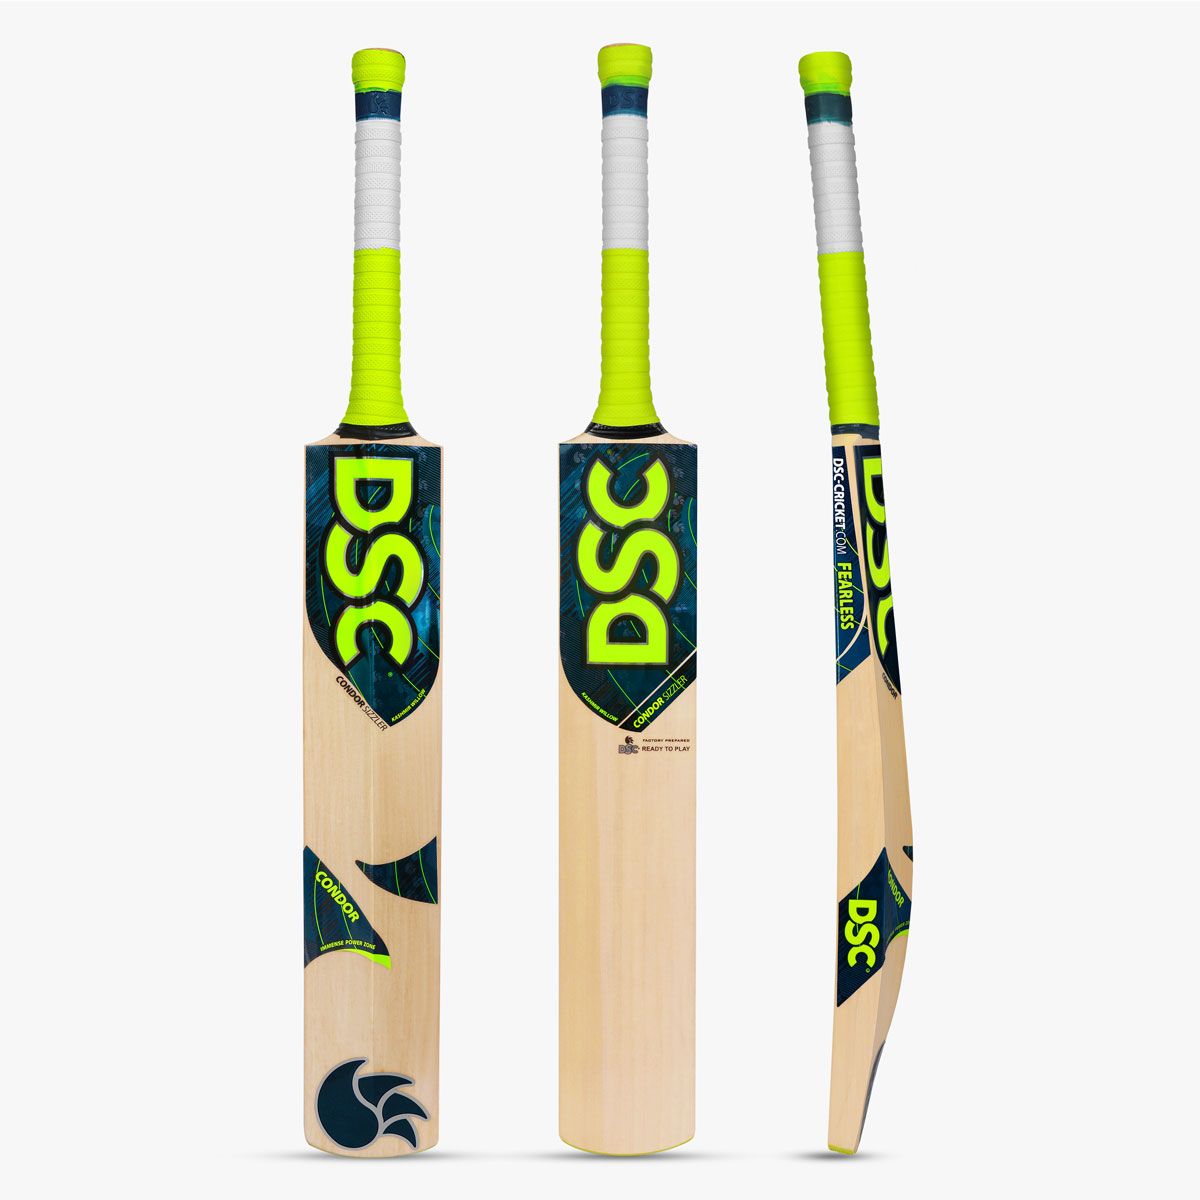 DSC Premium Kashmir Willow Cricket Kit